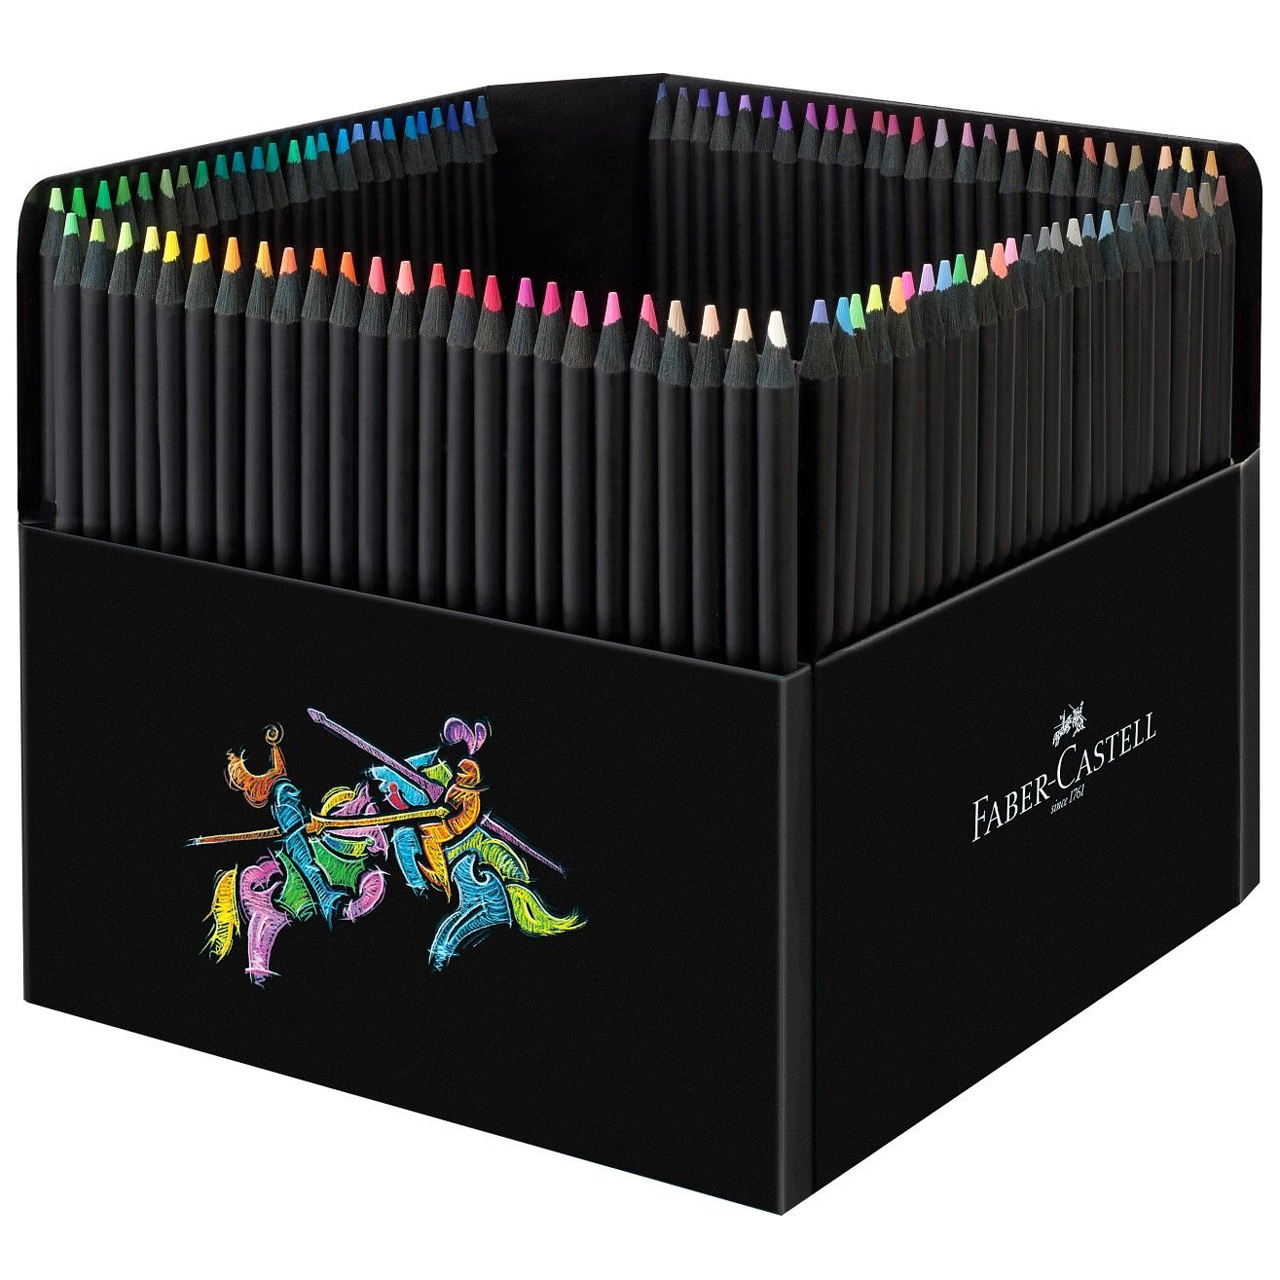 Faber-Castell-Black-Edition-Buntstifte-100er-Set-100-Farben-Aufsteller-116411-lafueliki